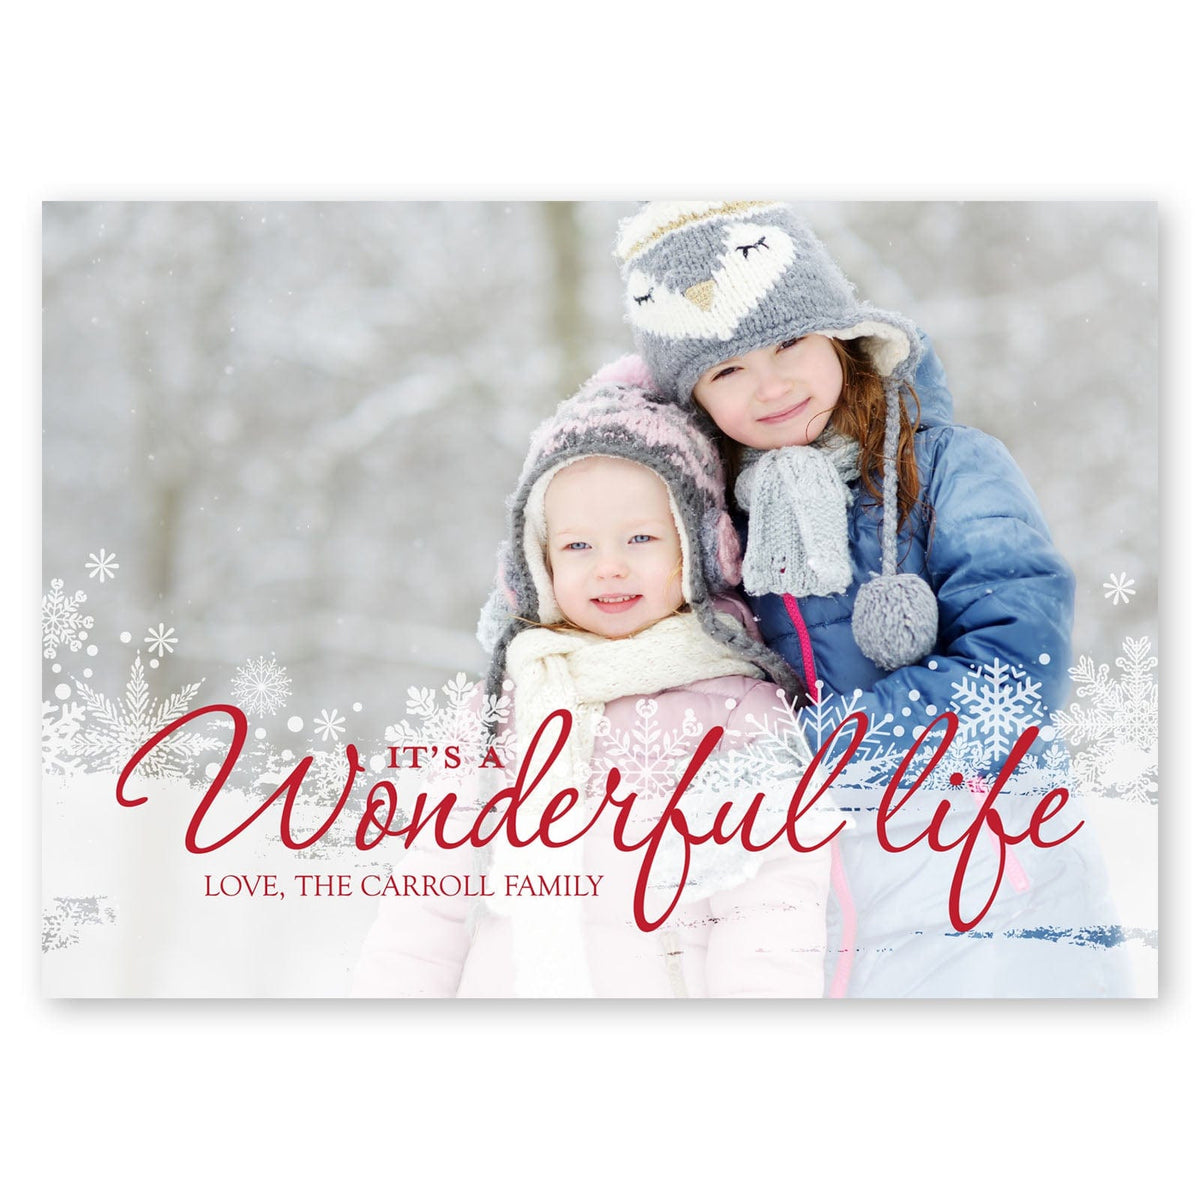 Snowy Wonderful Life Holiday Card Red Gartner Studios Christmas Card 95460